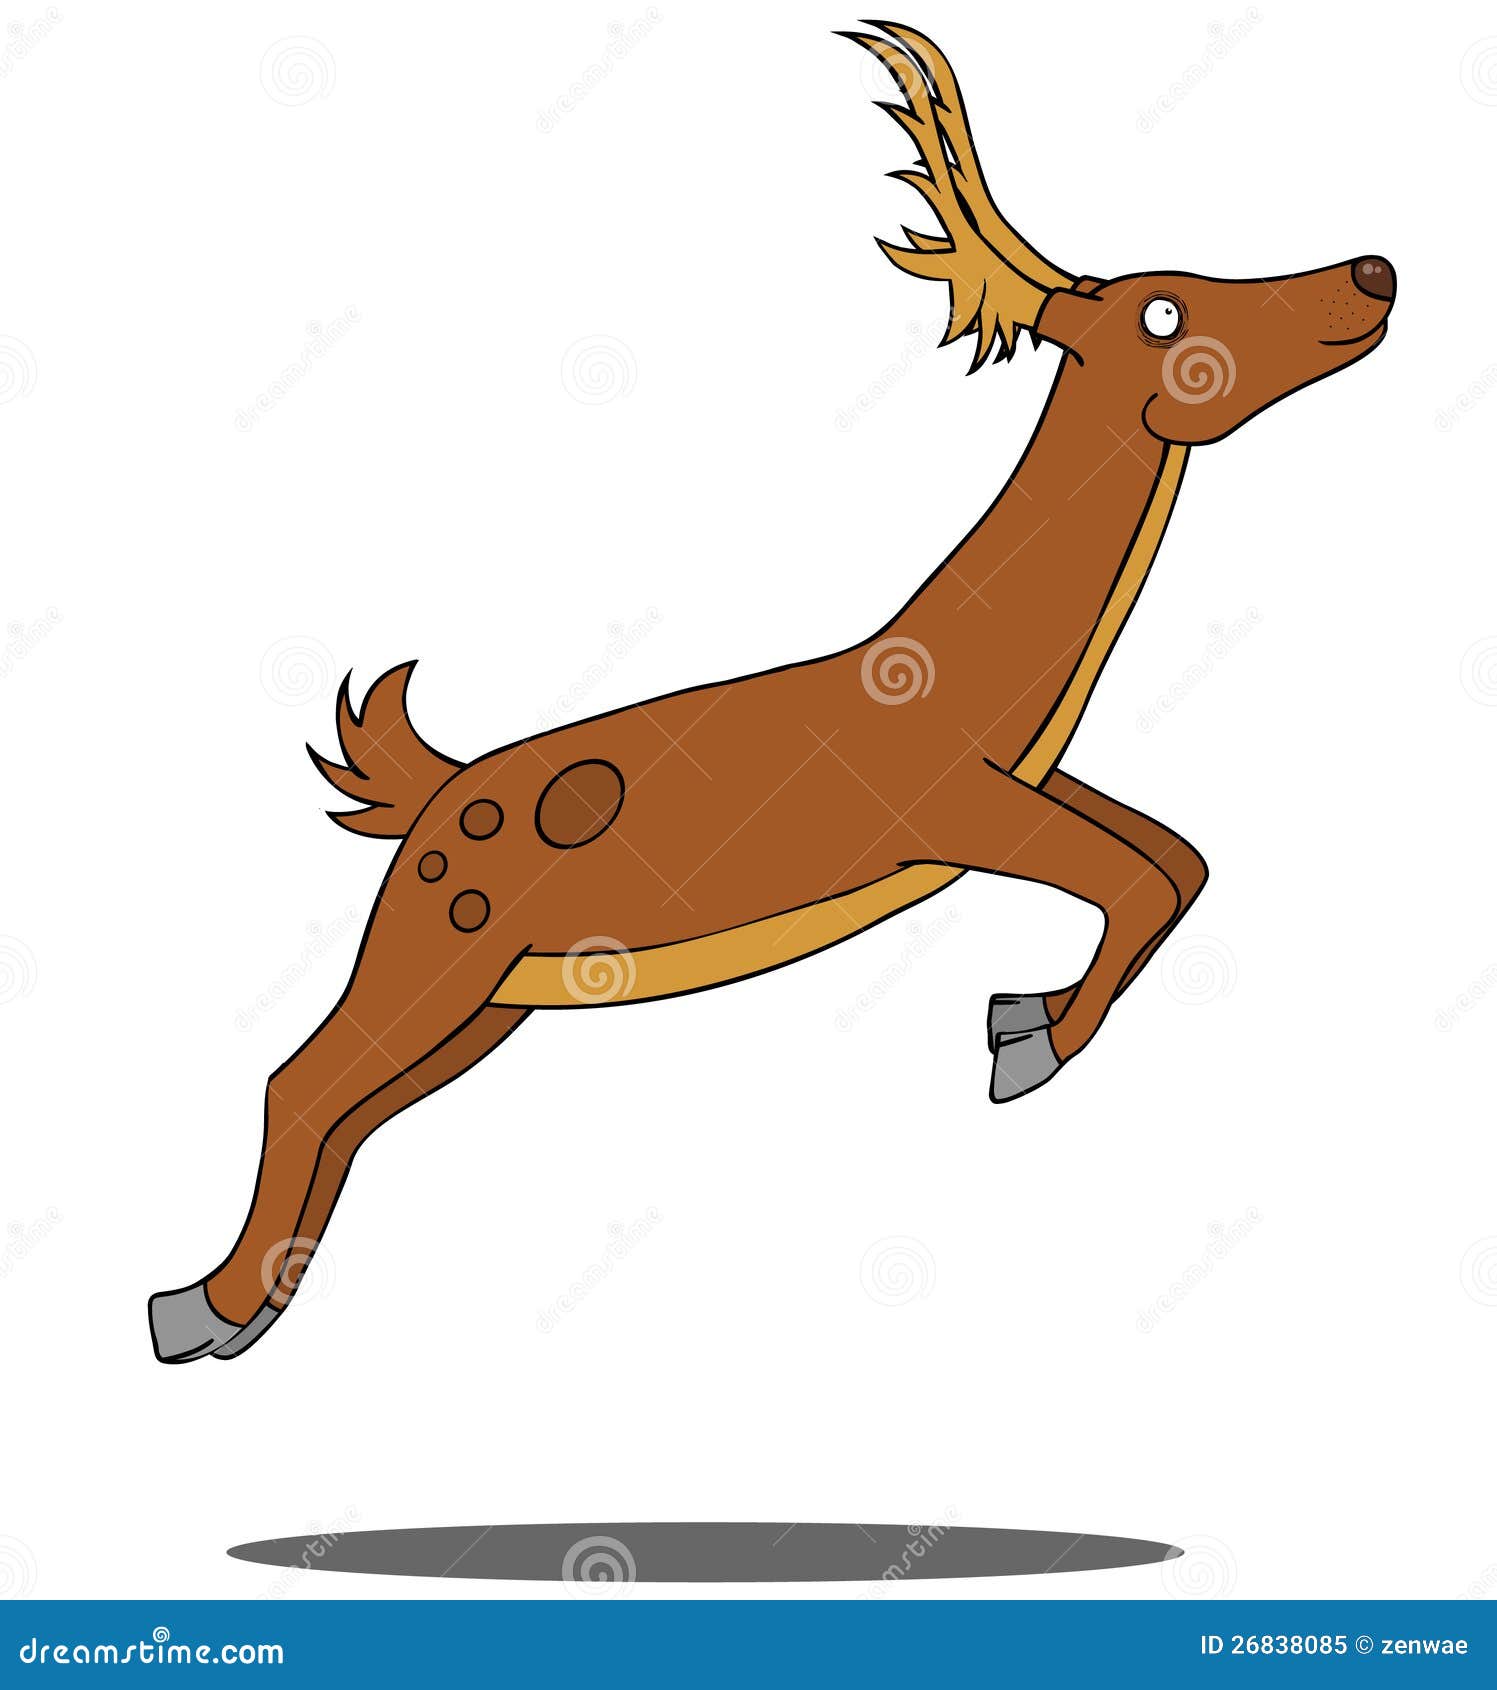 Running Deer Royalty Free Stock Photo - Image: 26838085